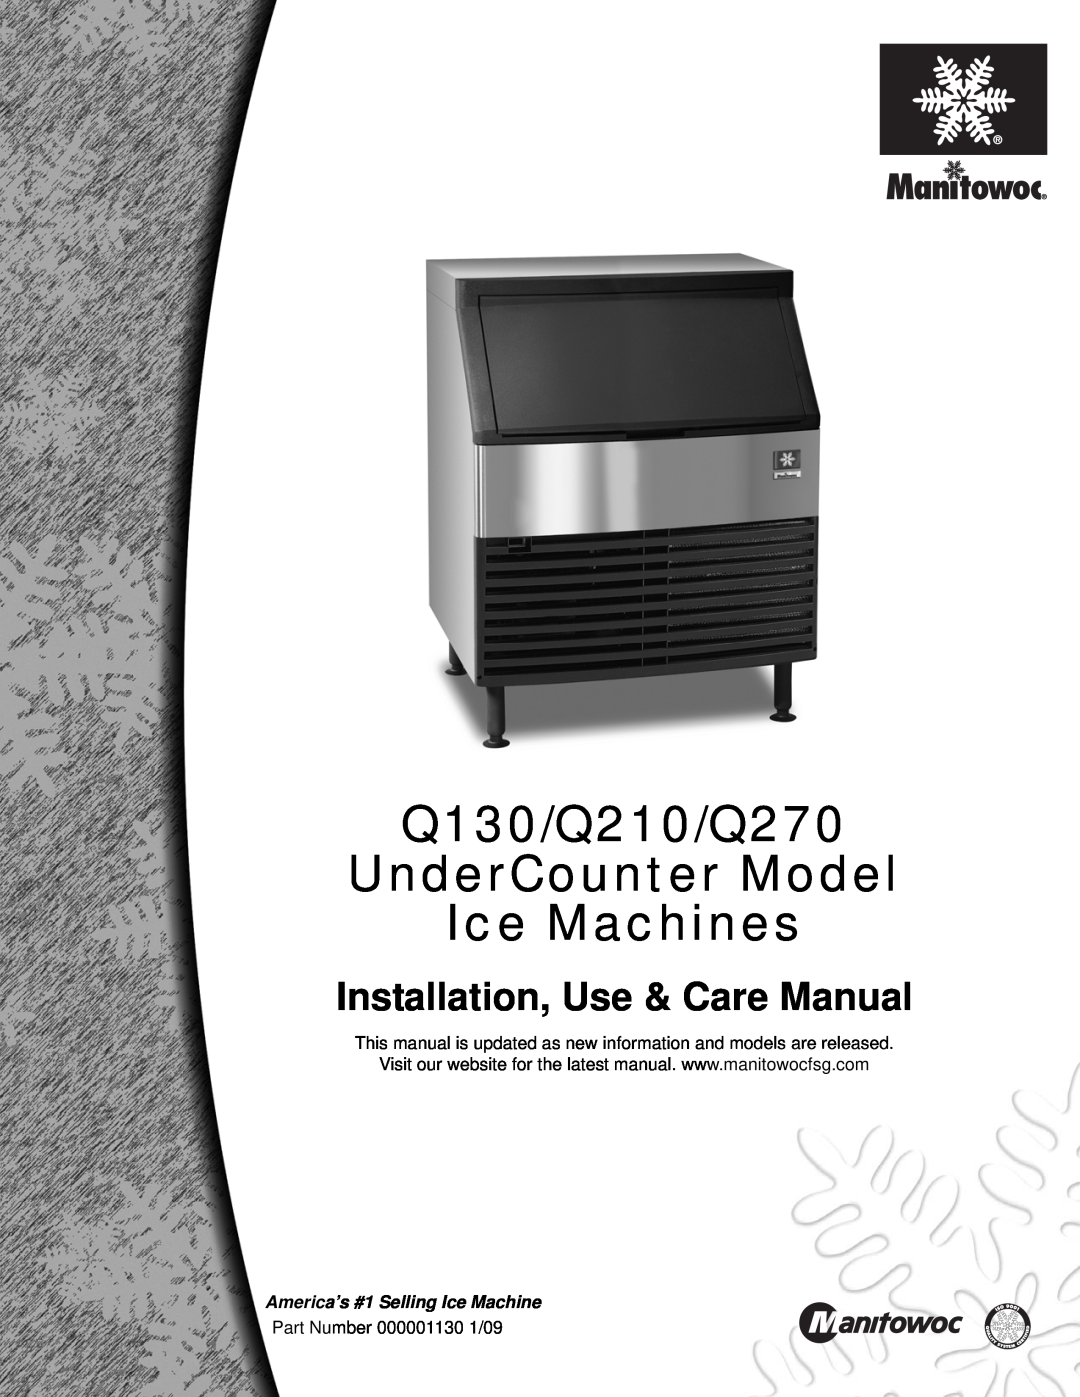 Manitowoc Ice manual Q130/Q210/Q270 UnderCounter Model Ice Machines, Installation, Use & Care Manual 